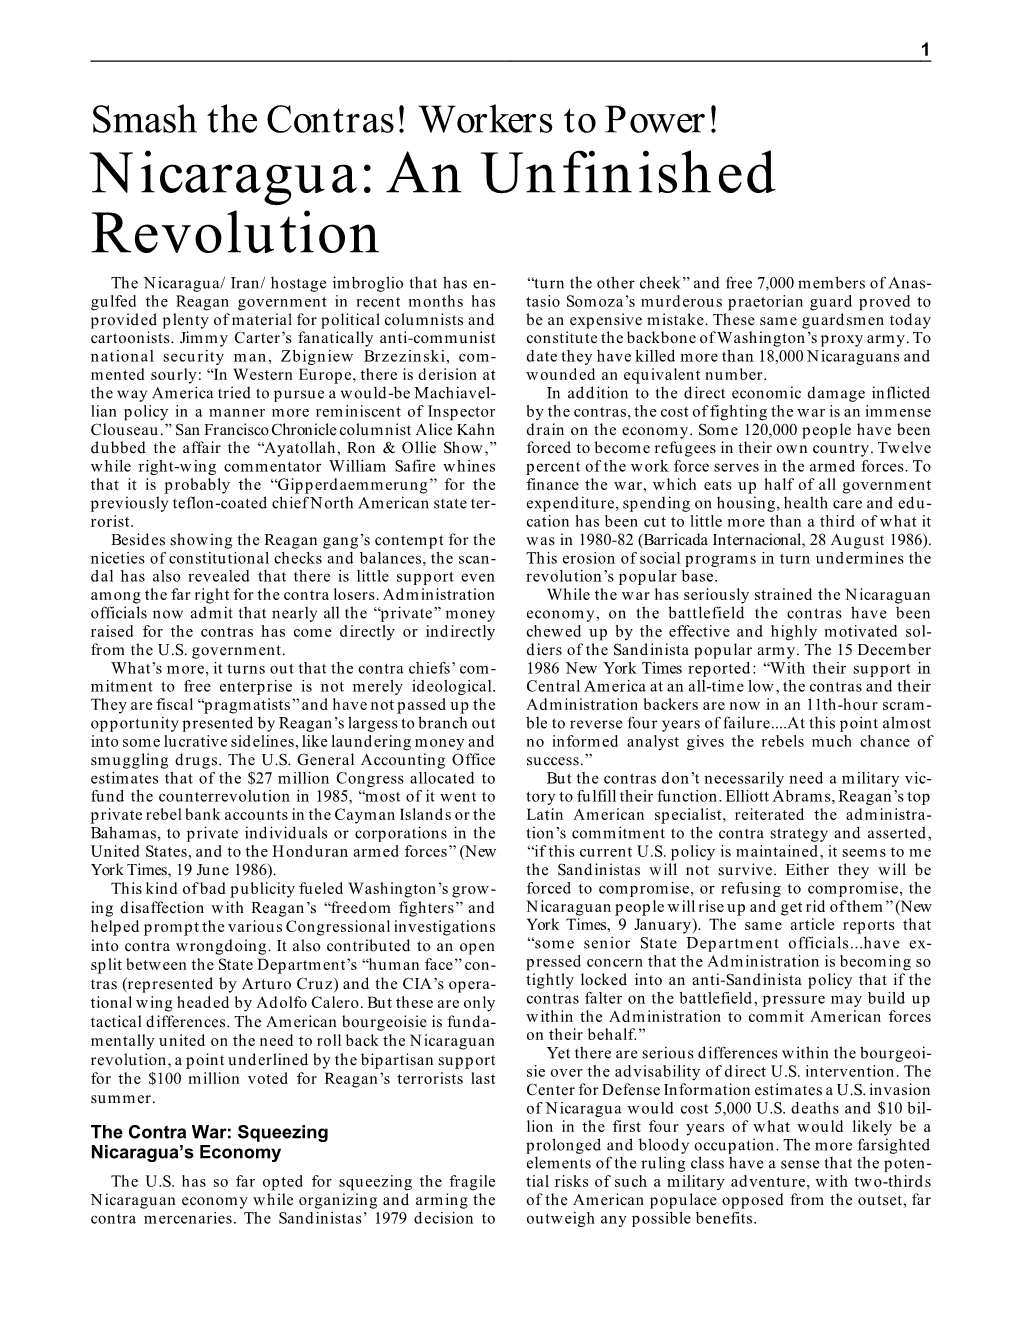 Nicaragua: an Unfinished Revolution